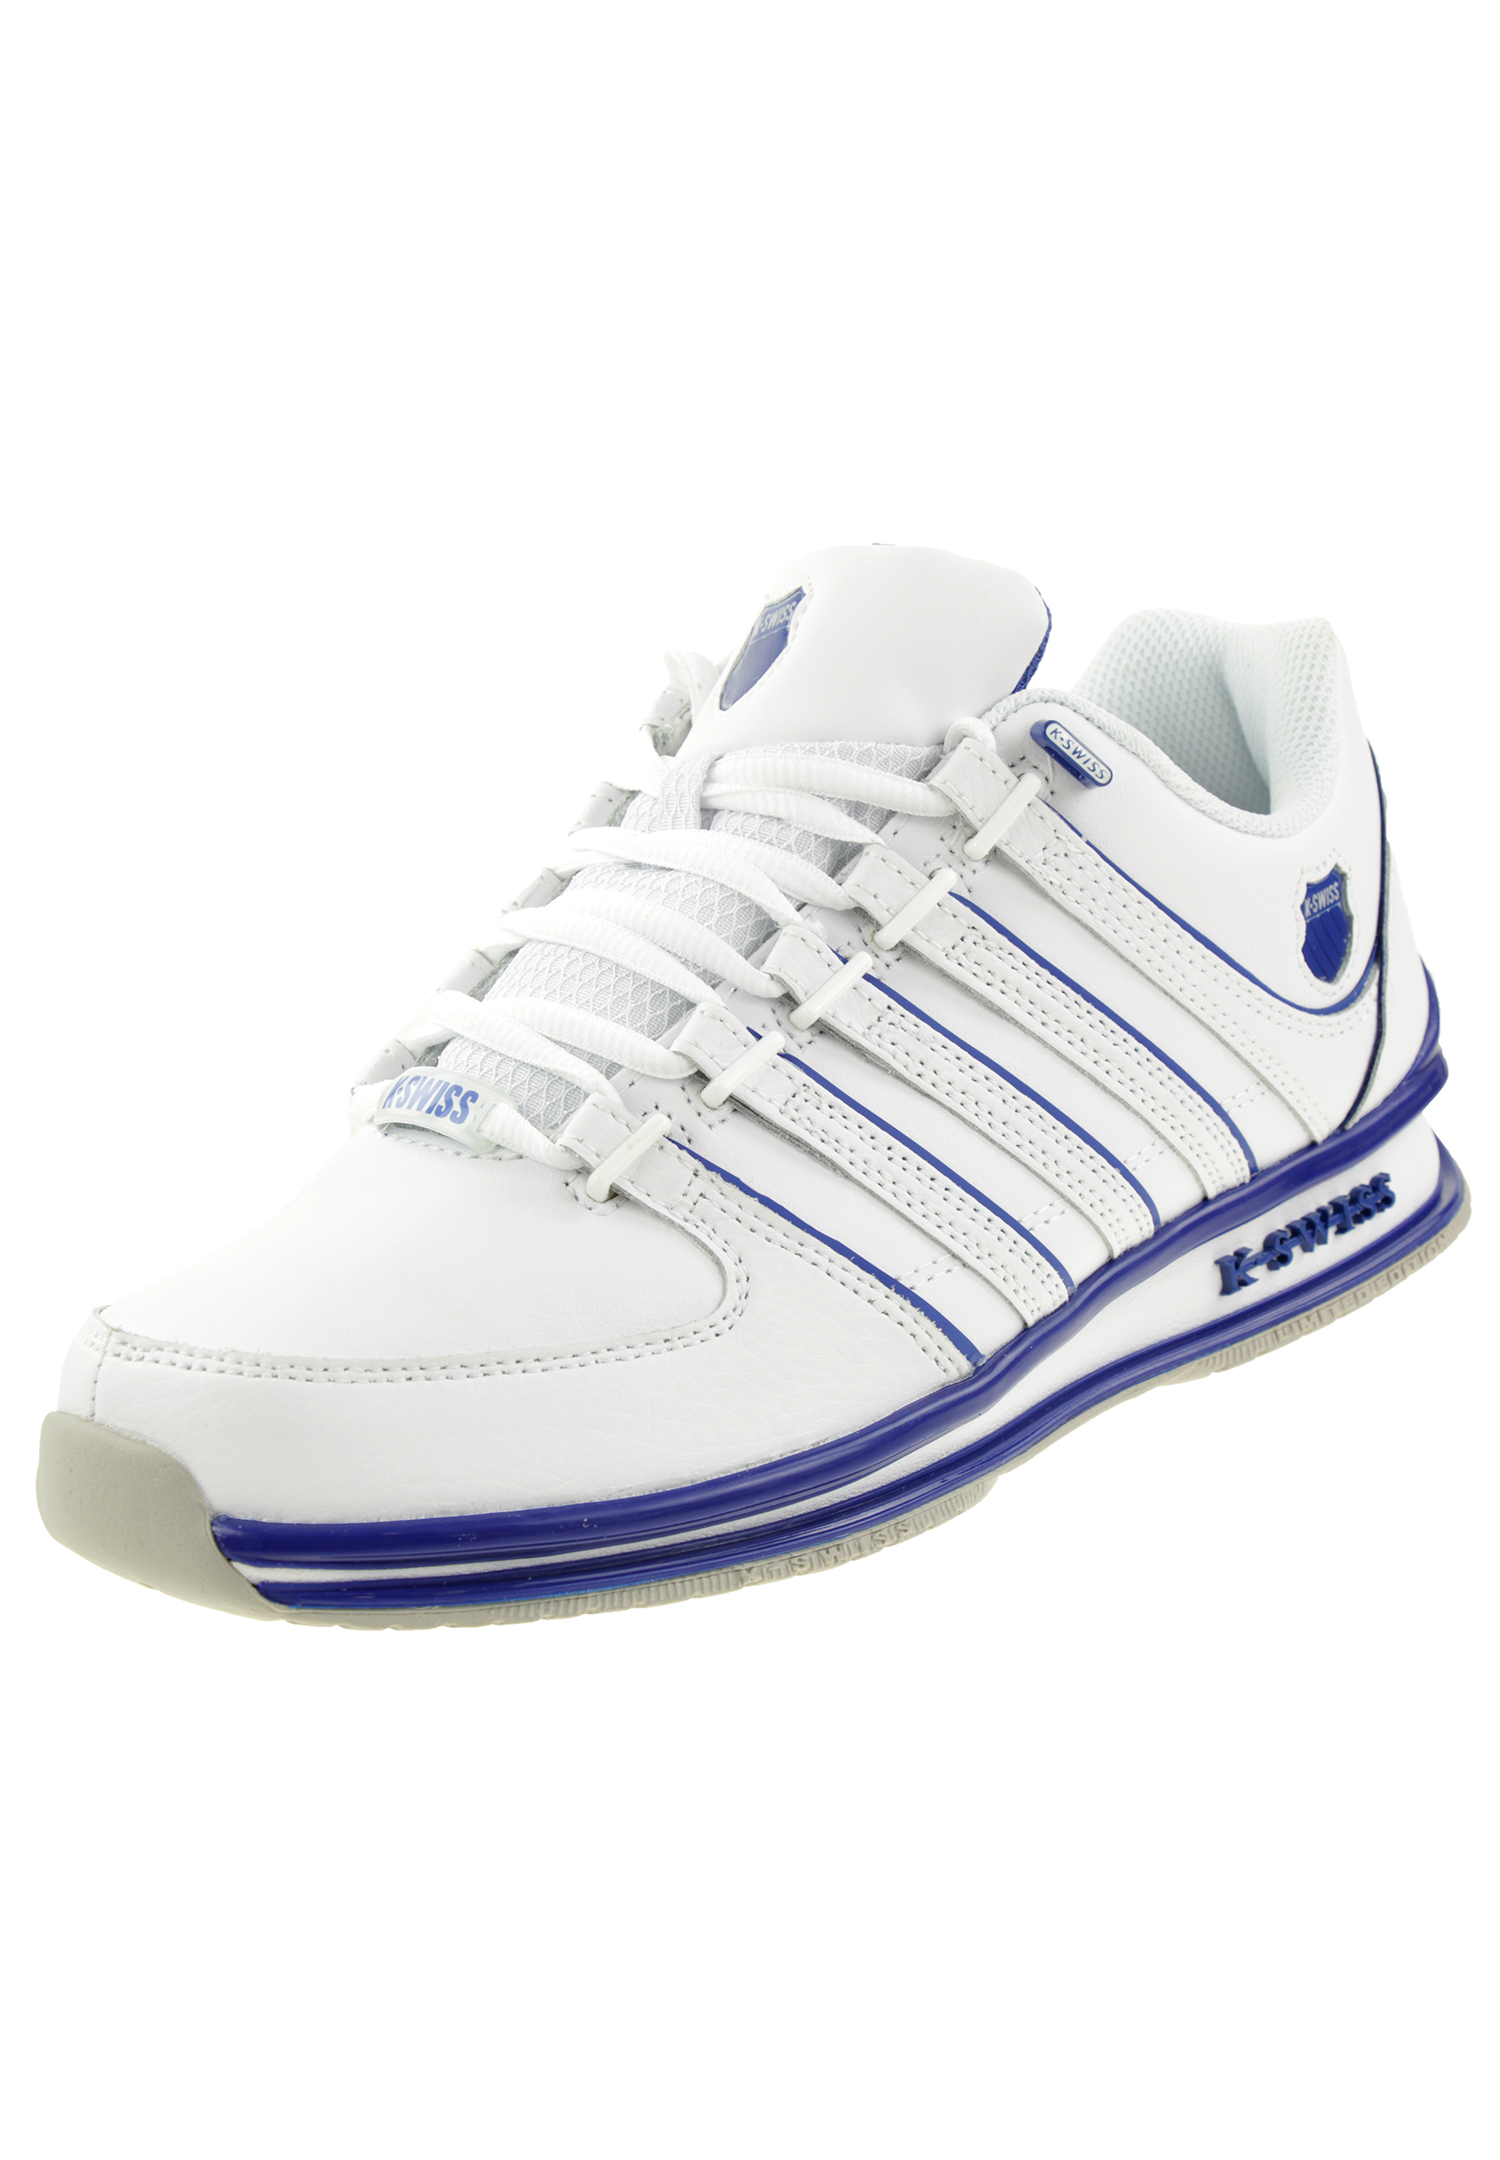 K-Swiss Rinzler Herren Sneaker Sportschuh 01235-198-M weiss blau